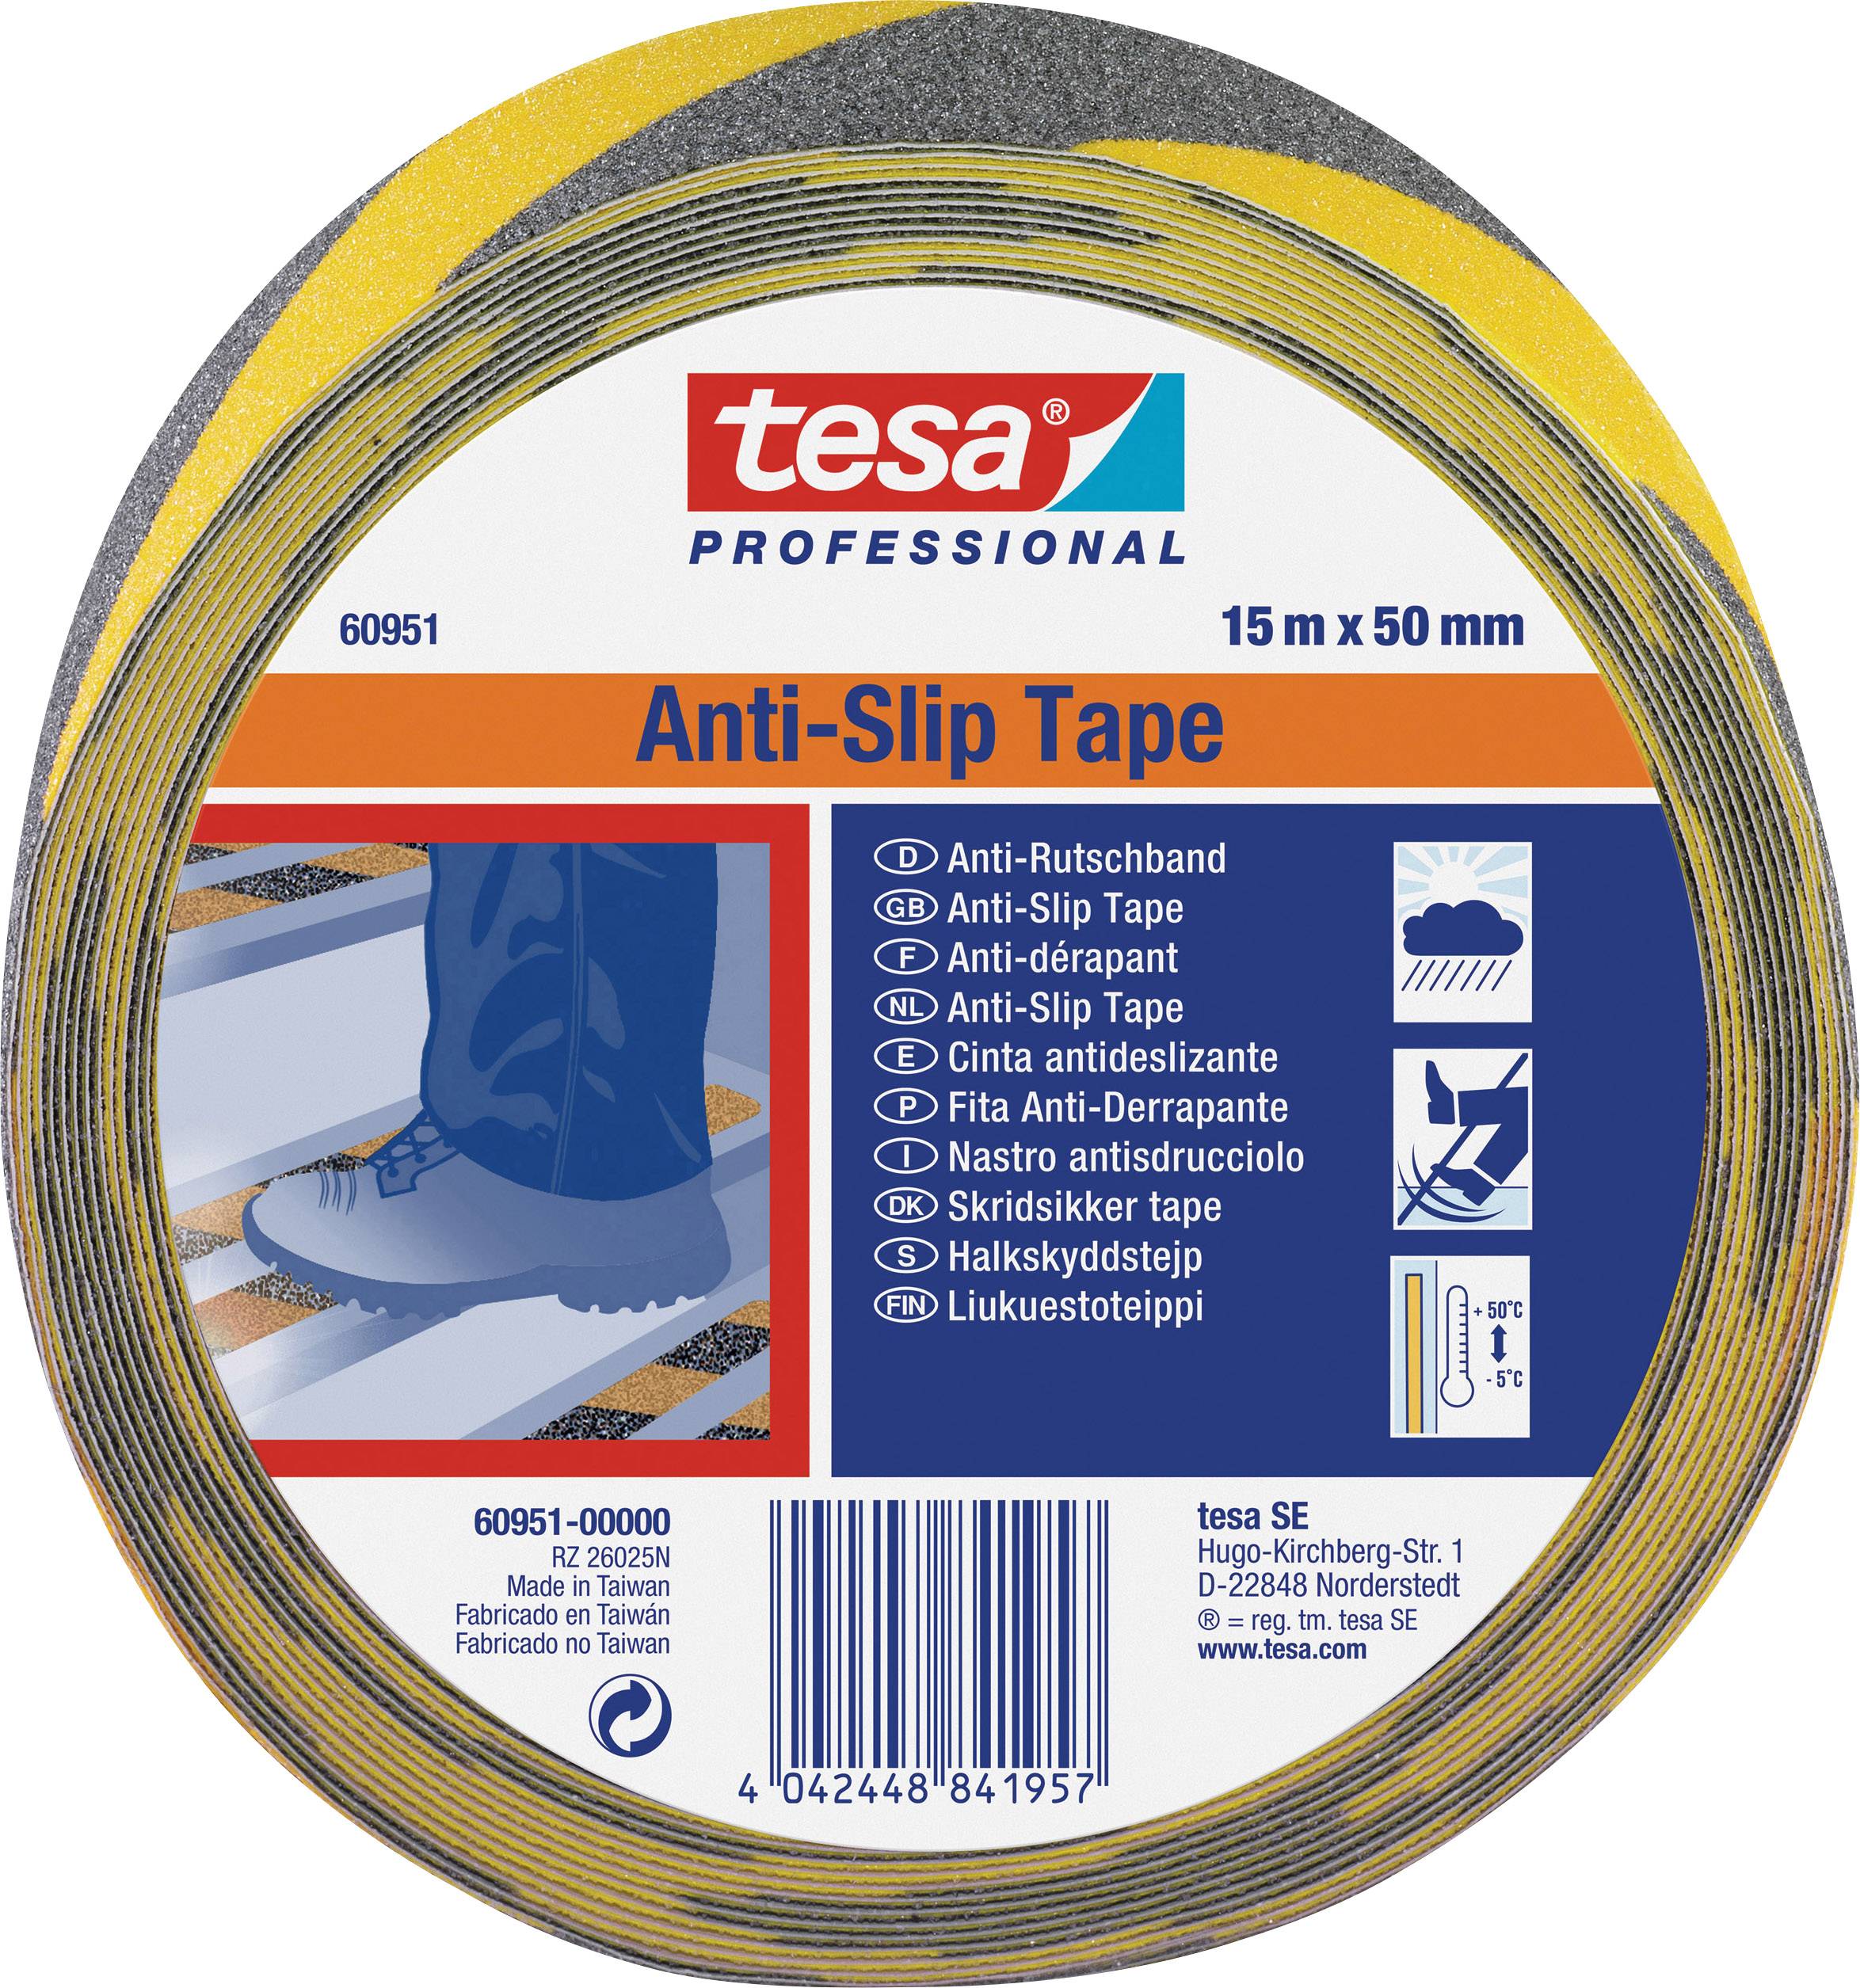 Anti-slip Tape